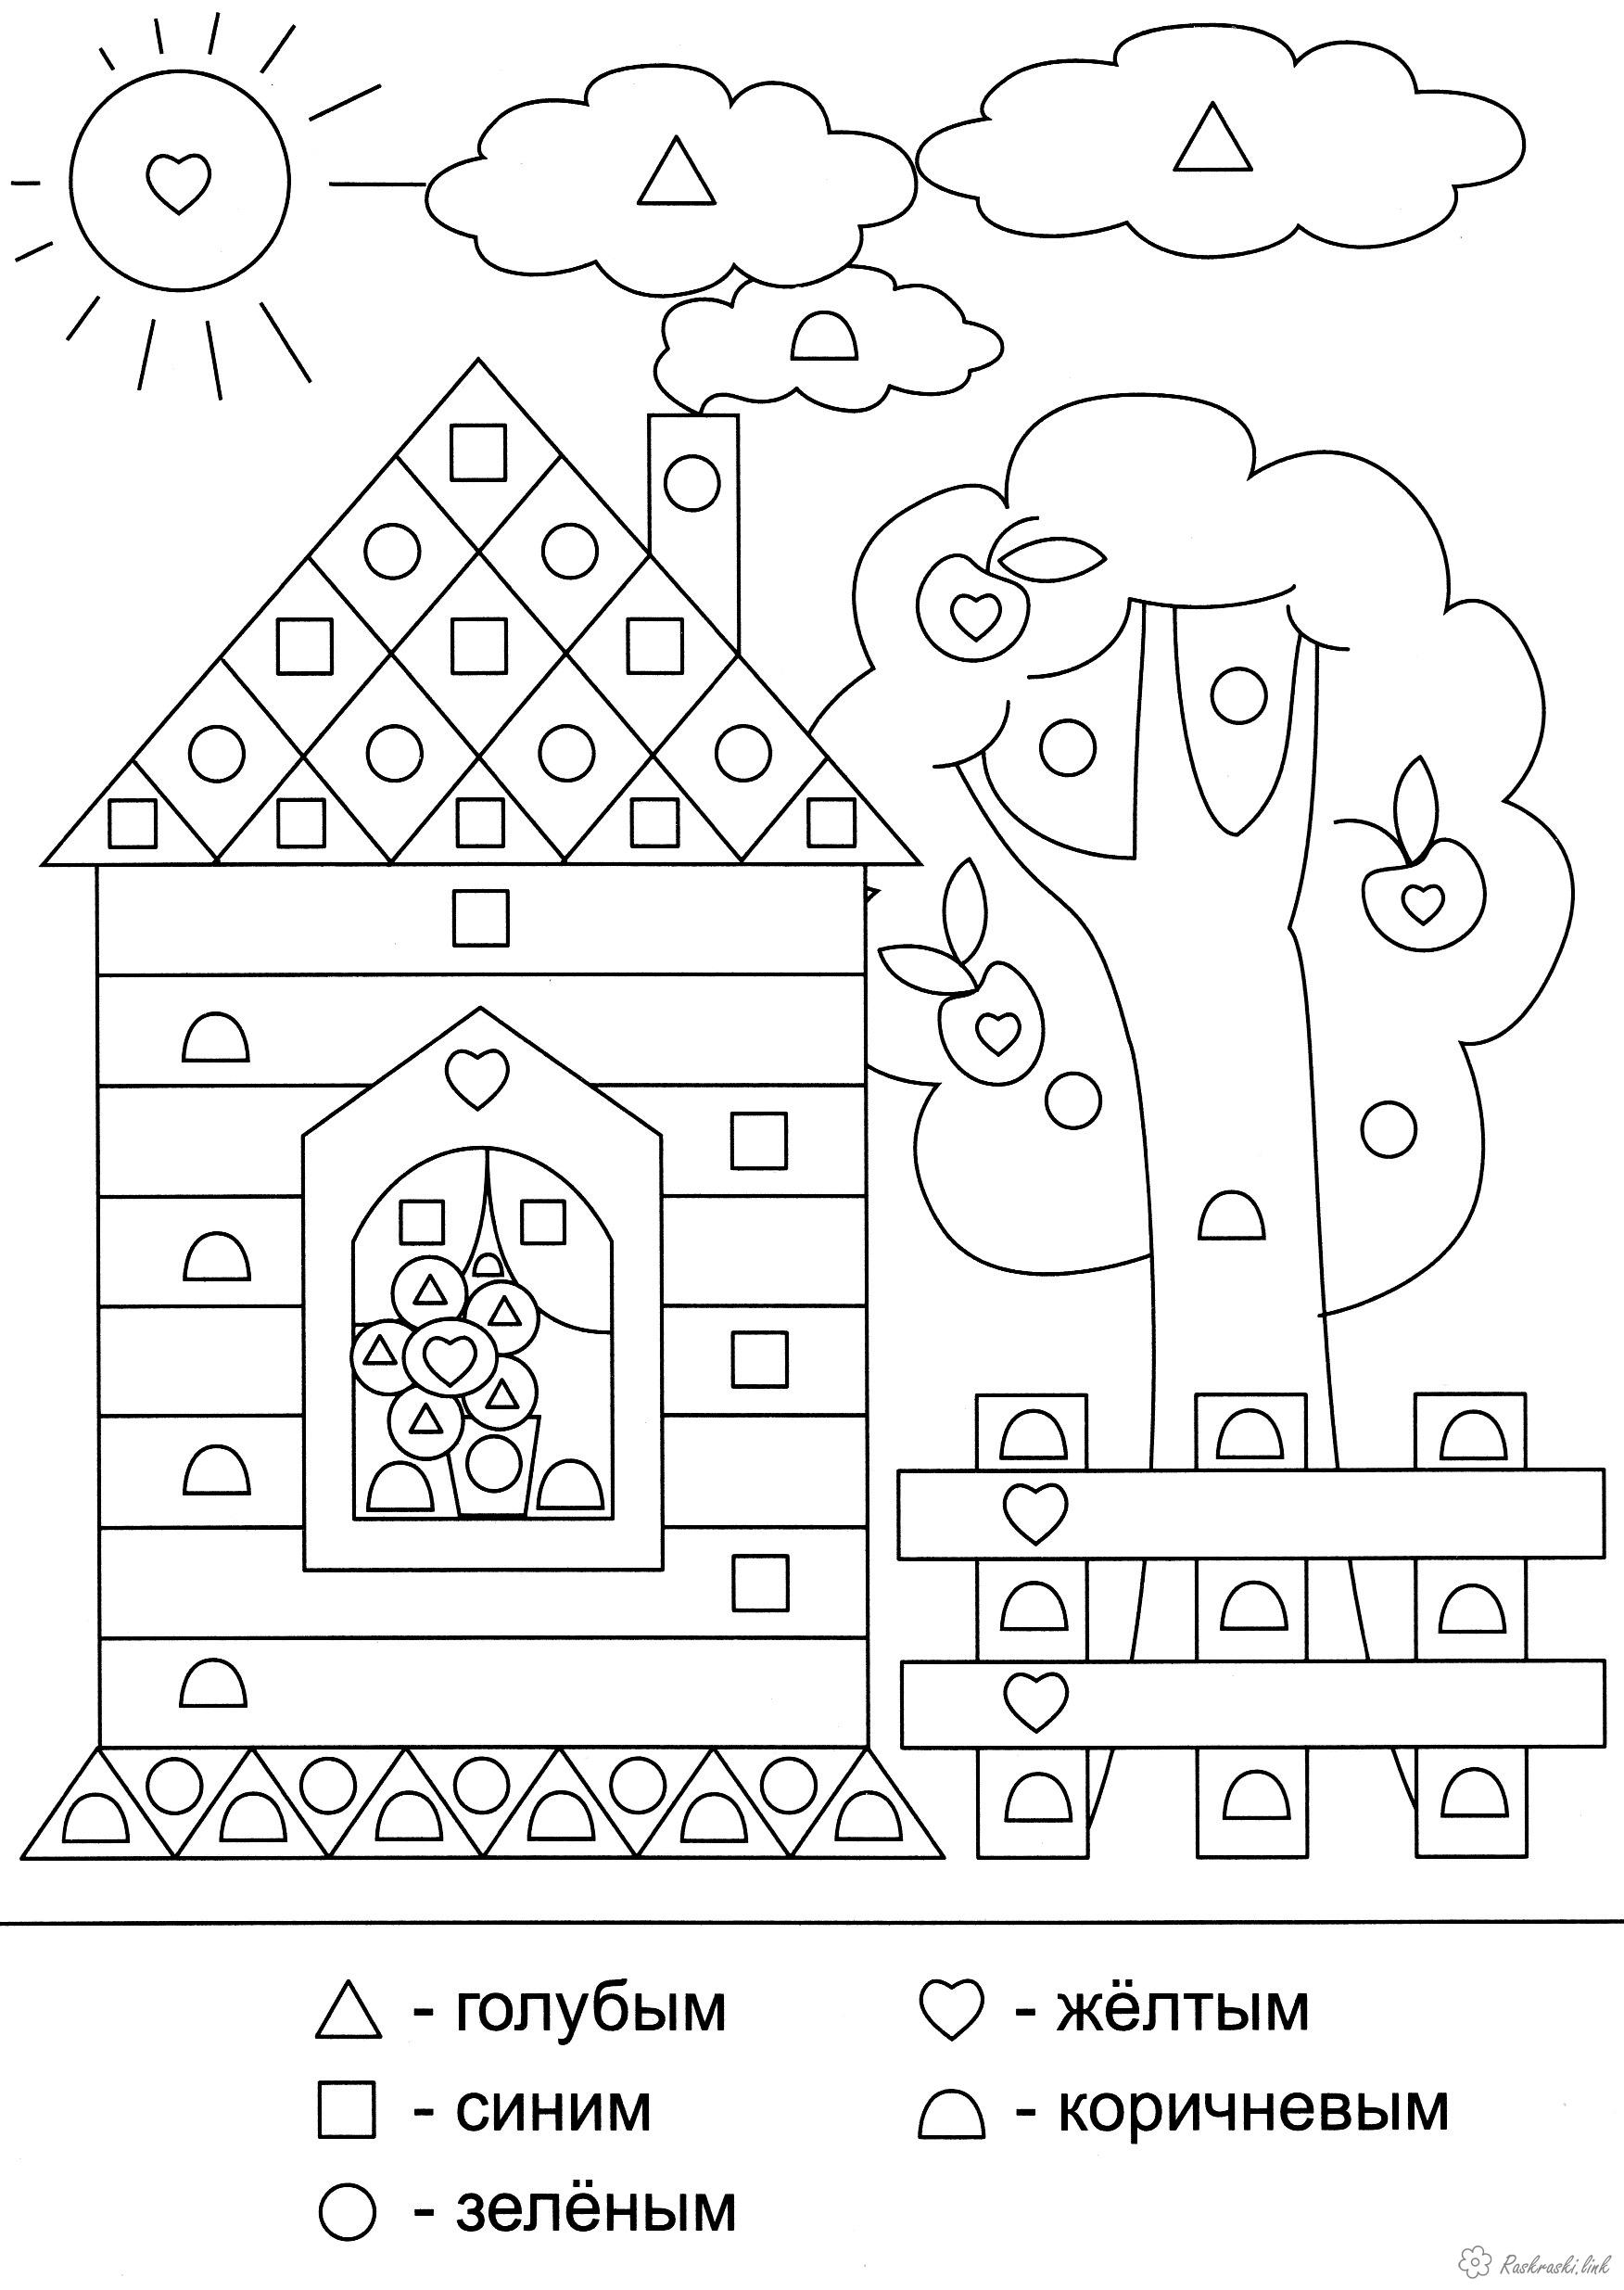 Розмальовки Як намалювати сонце будинок паркан дерево облок трикутник квадрат коло